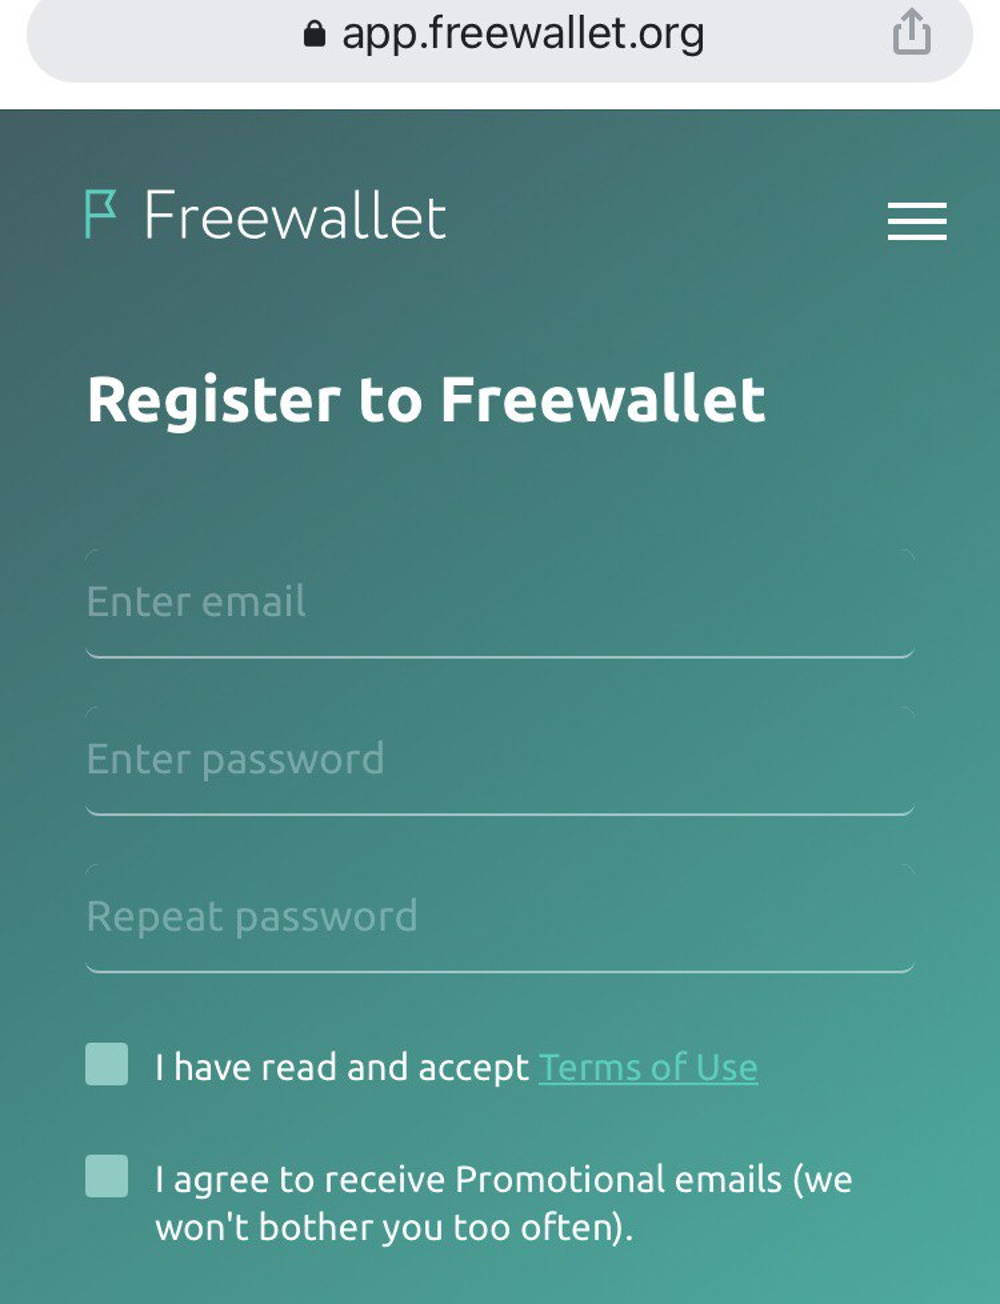 Freewallet_ (m) _registration.jpg